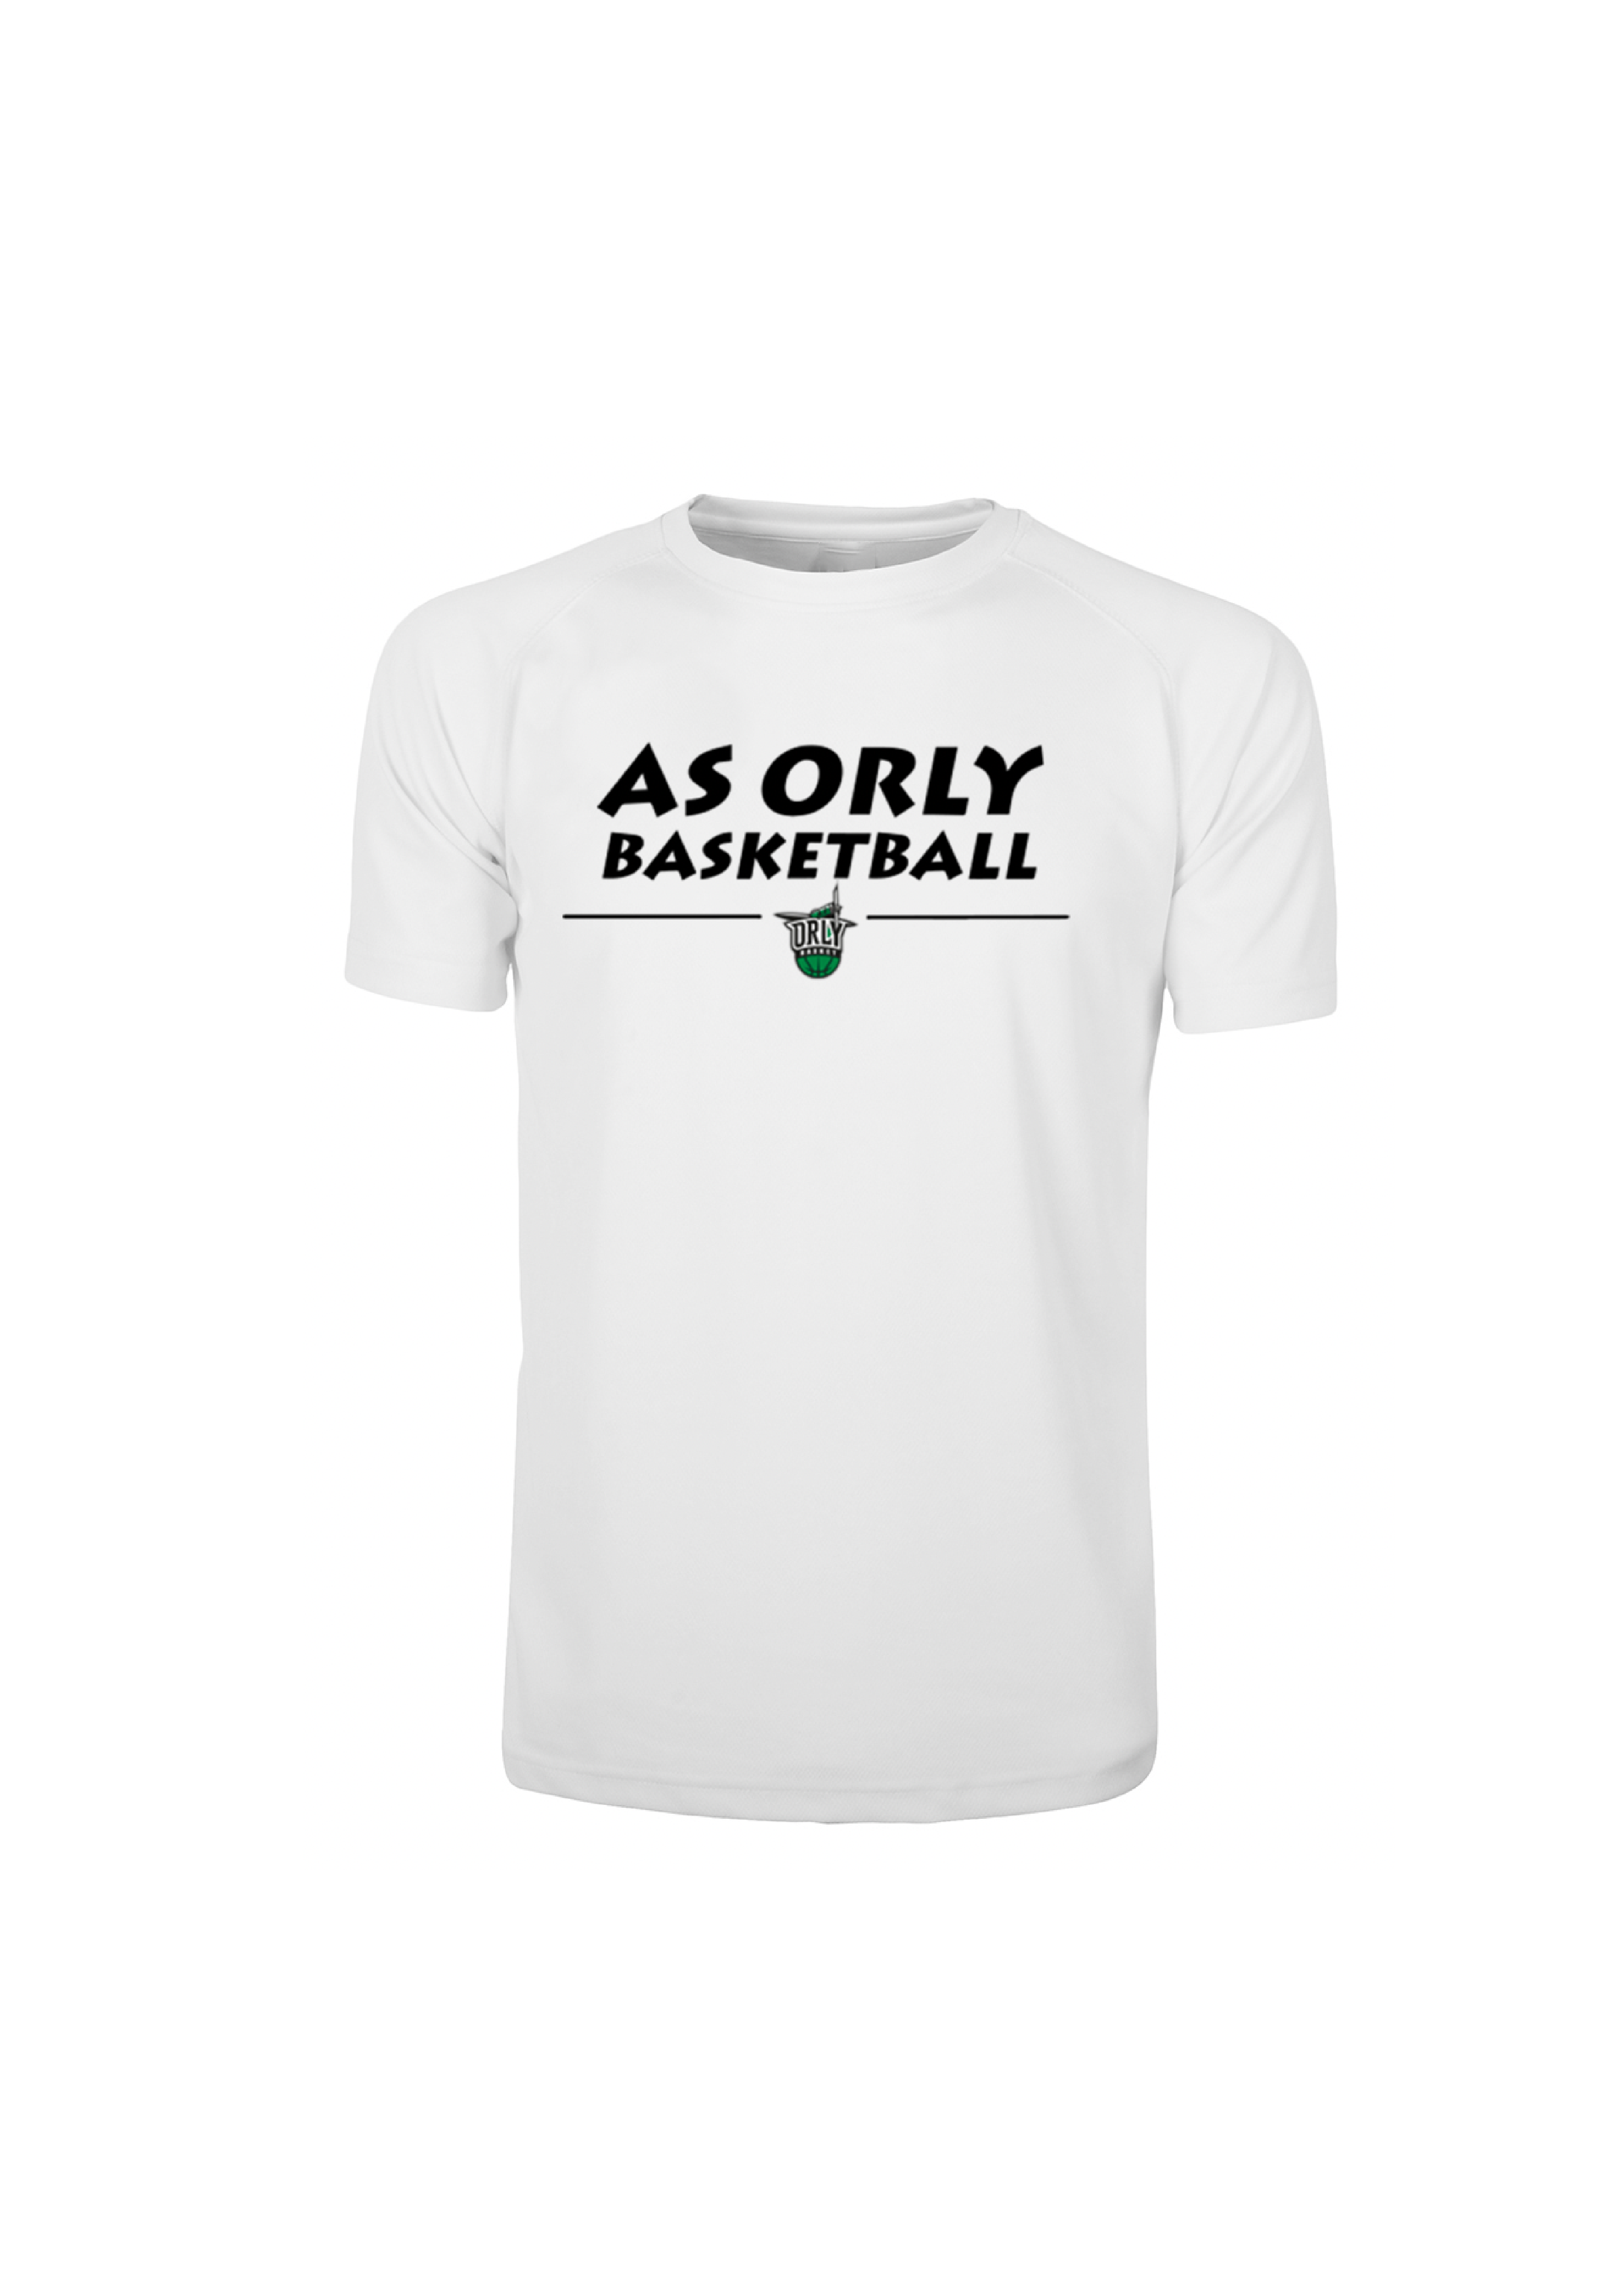 T-shirt blanc (AS Orly Basket)